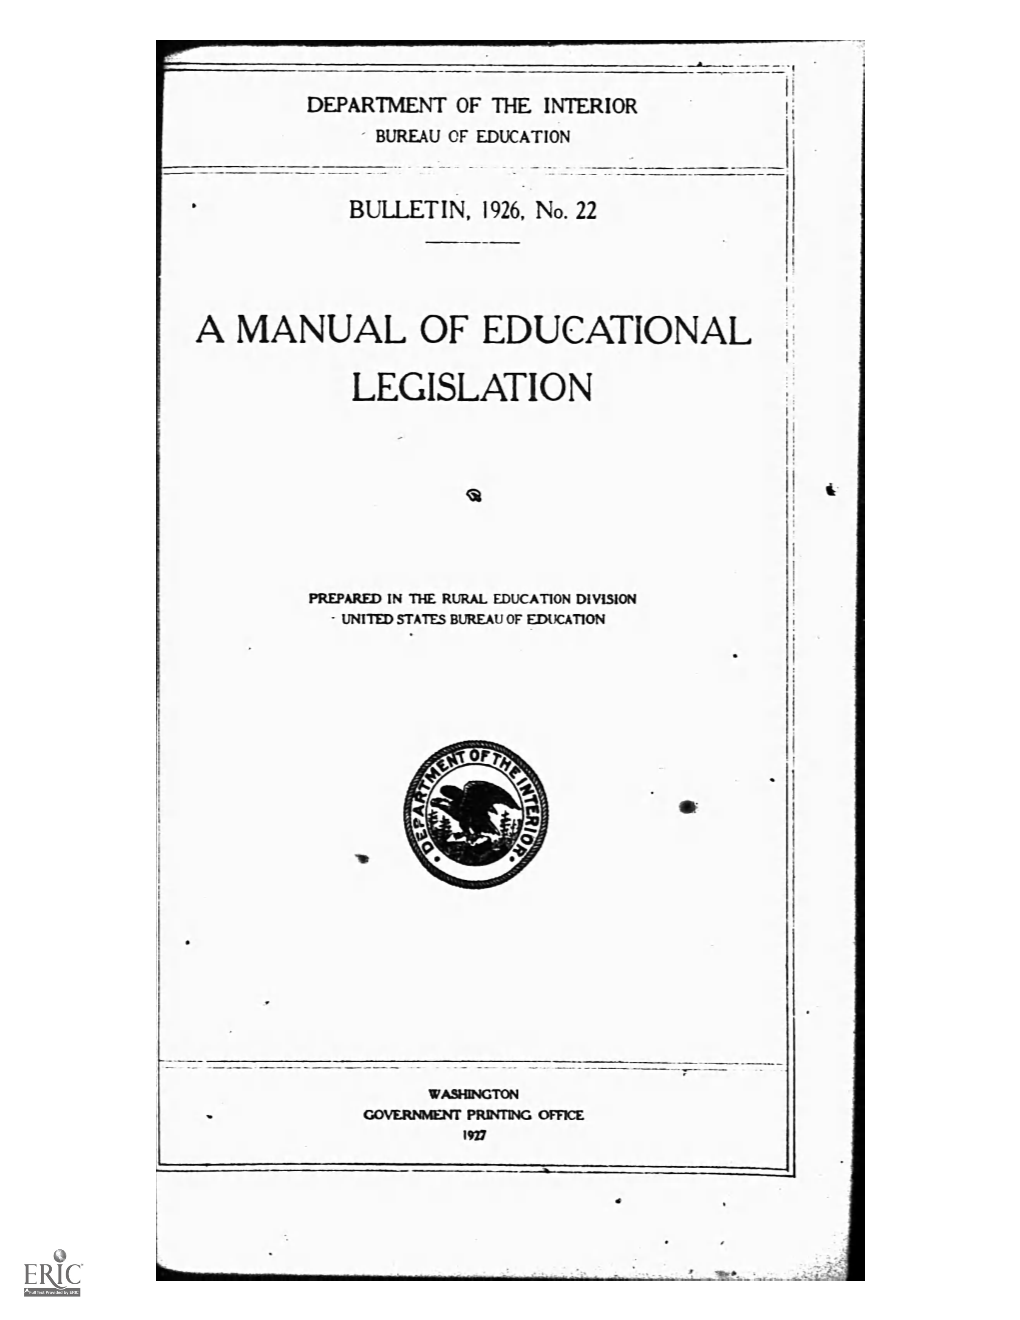 A Manual of Educational